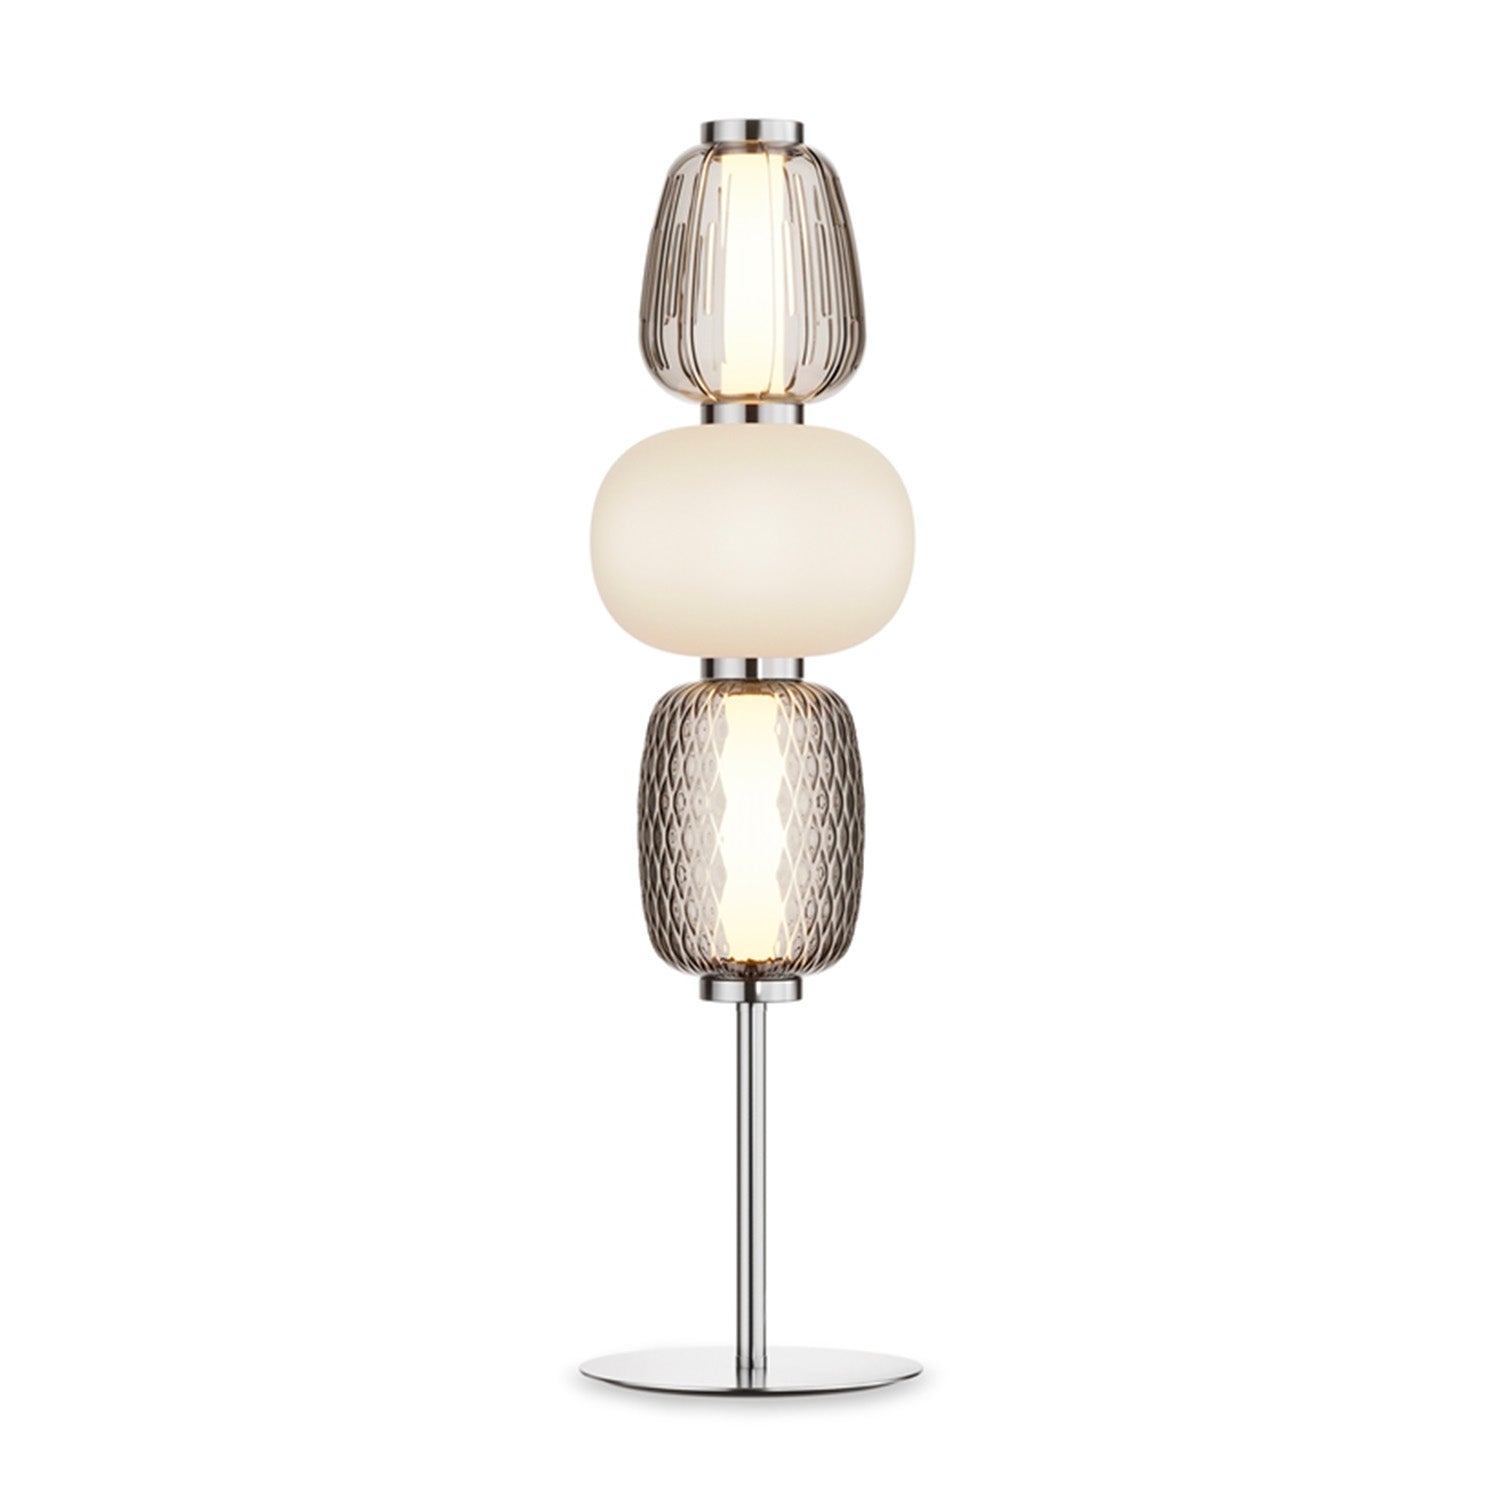 PATTERN - Art deco glass table lamp